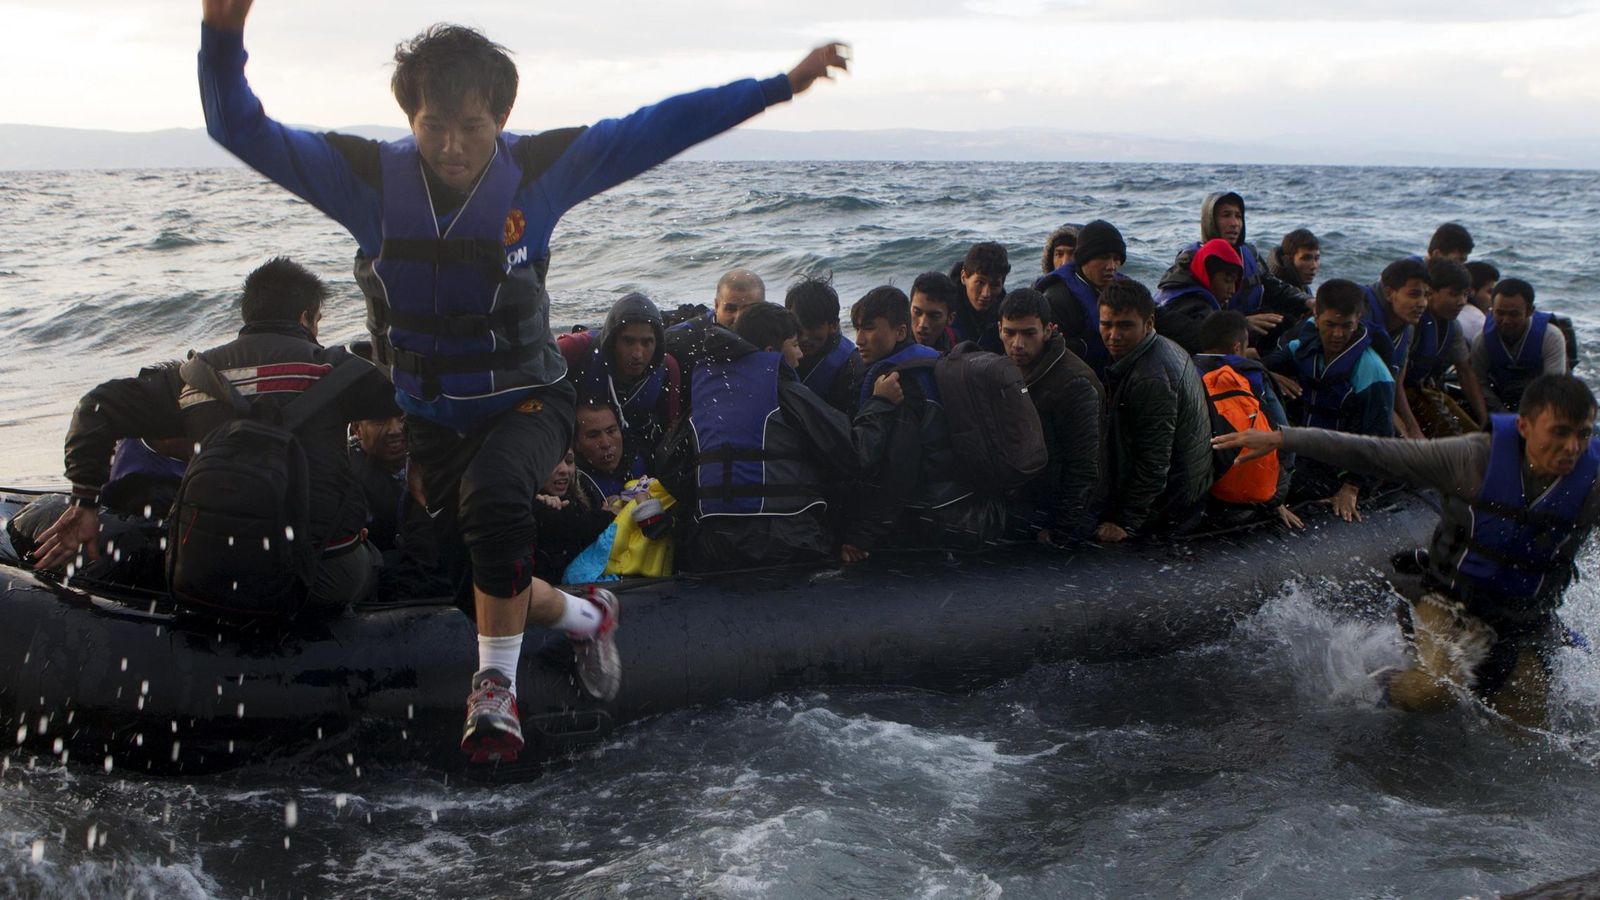 Foto: Refugiados e inmigrantes llegan a la costa de la isla de Lesbos en un bote abarrotado, el 1 de octubre de 2015 (Reuters).  